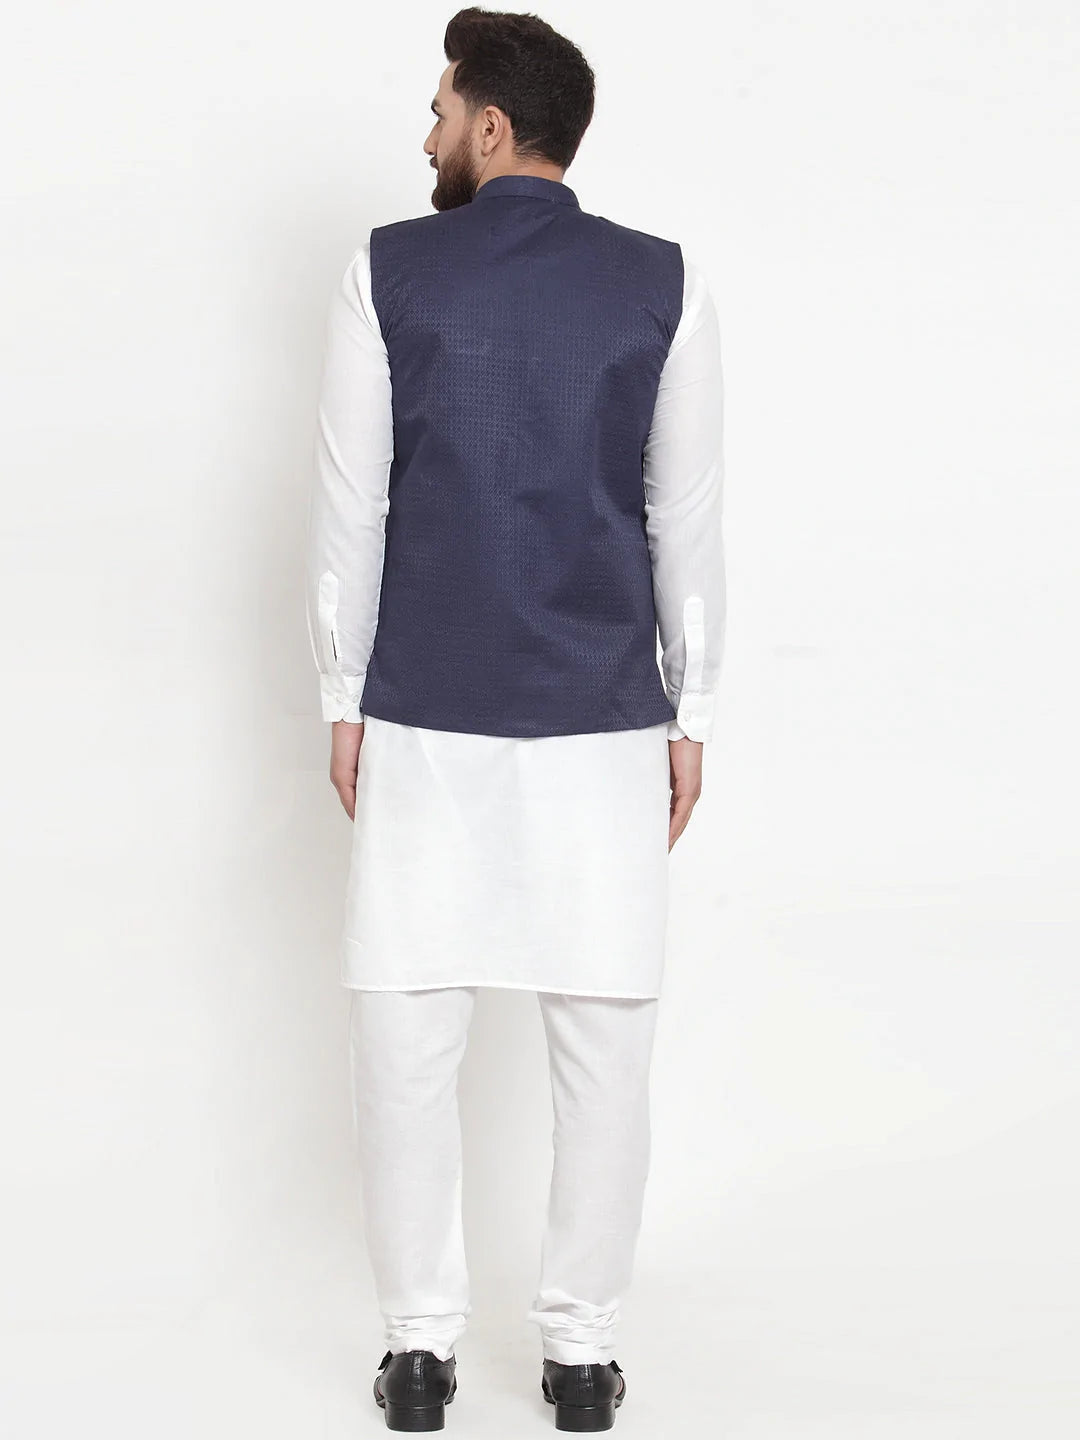 Jompers Men's Solid Cotton Kurta Pajama with Woven Jacquard Waistcoat ( JOKP WC 4057 Navy )